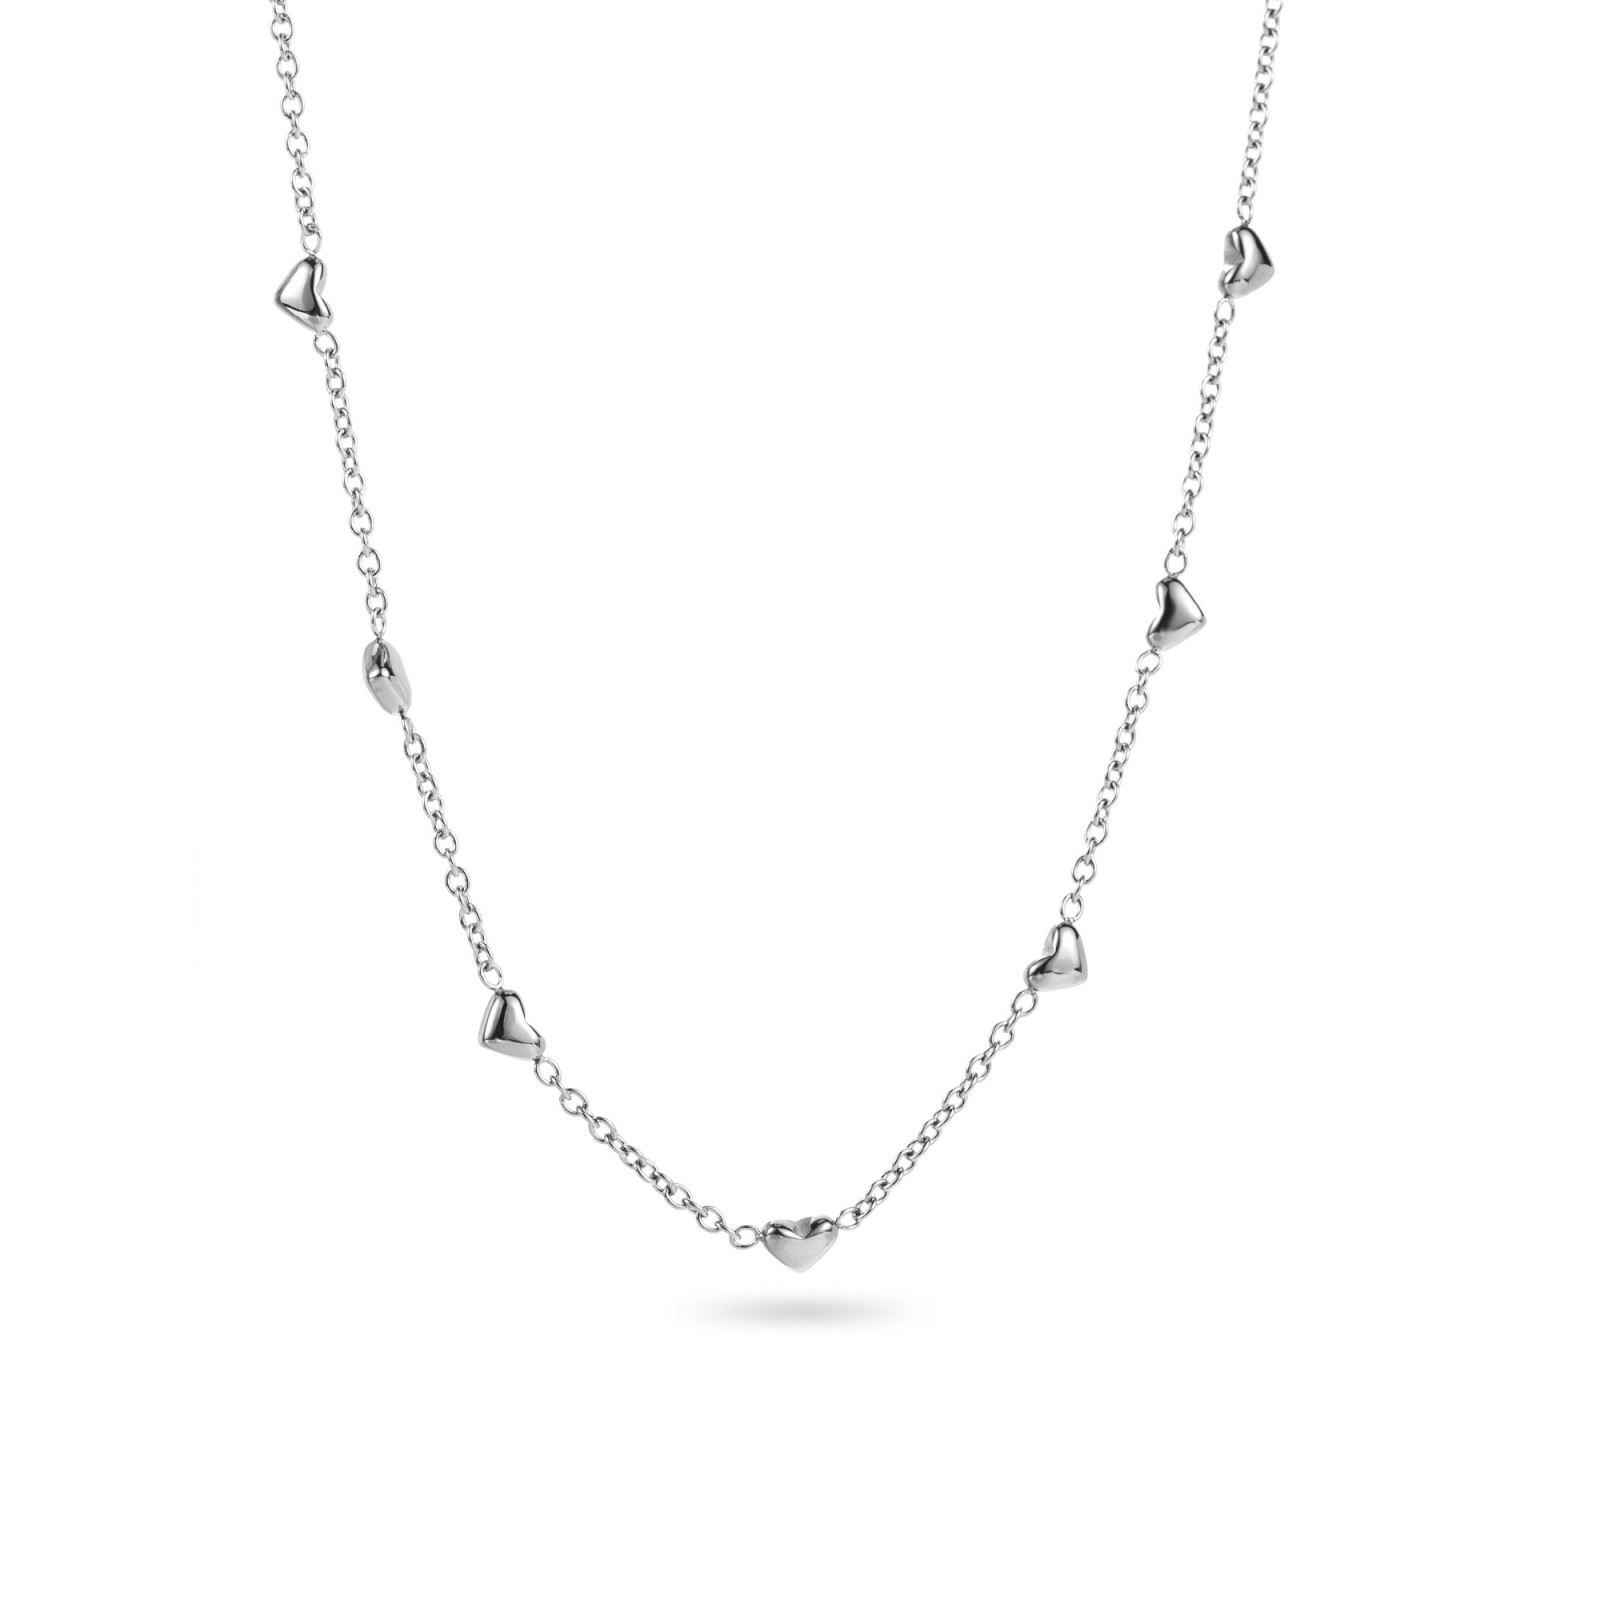 Farandole of Little Steel Hearts Necklace Color:Silver